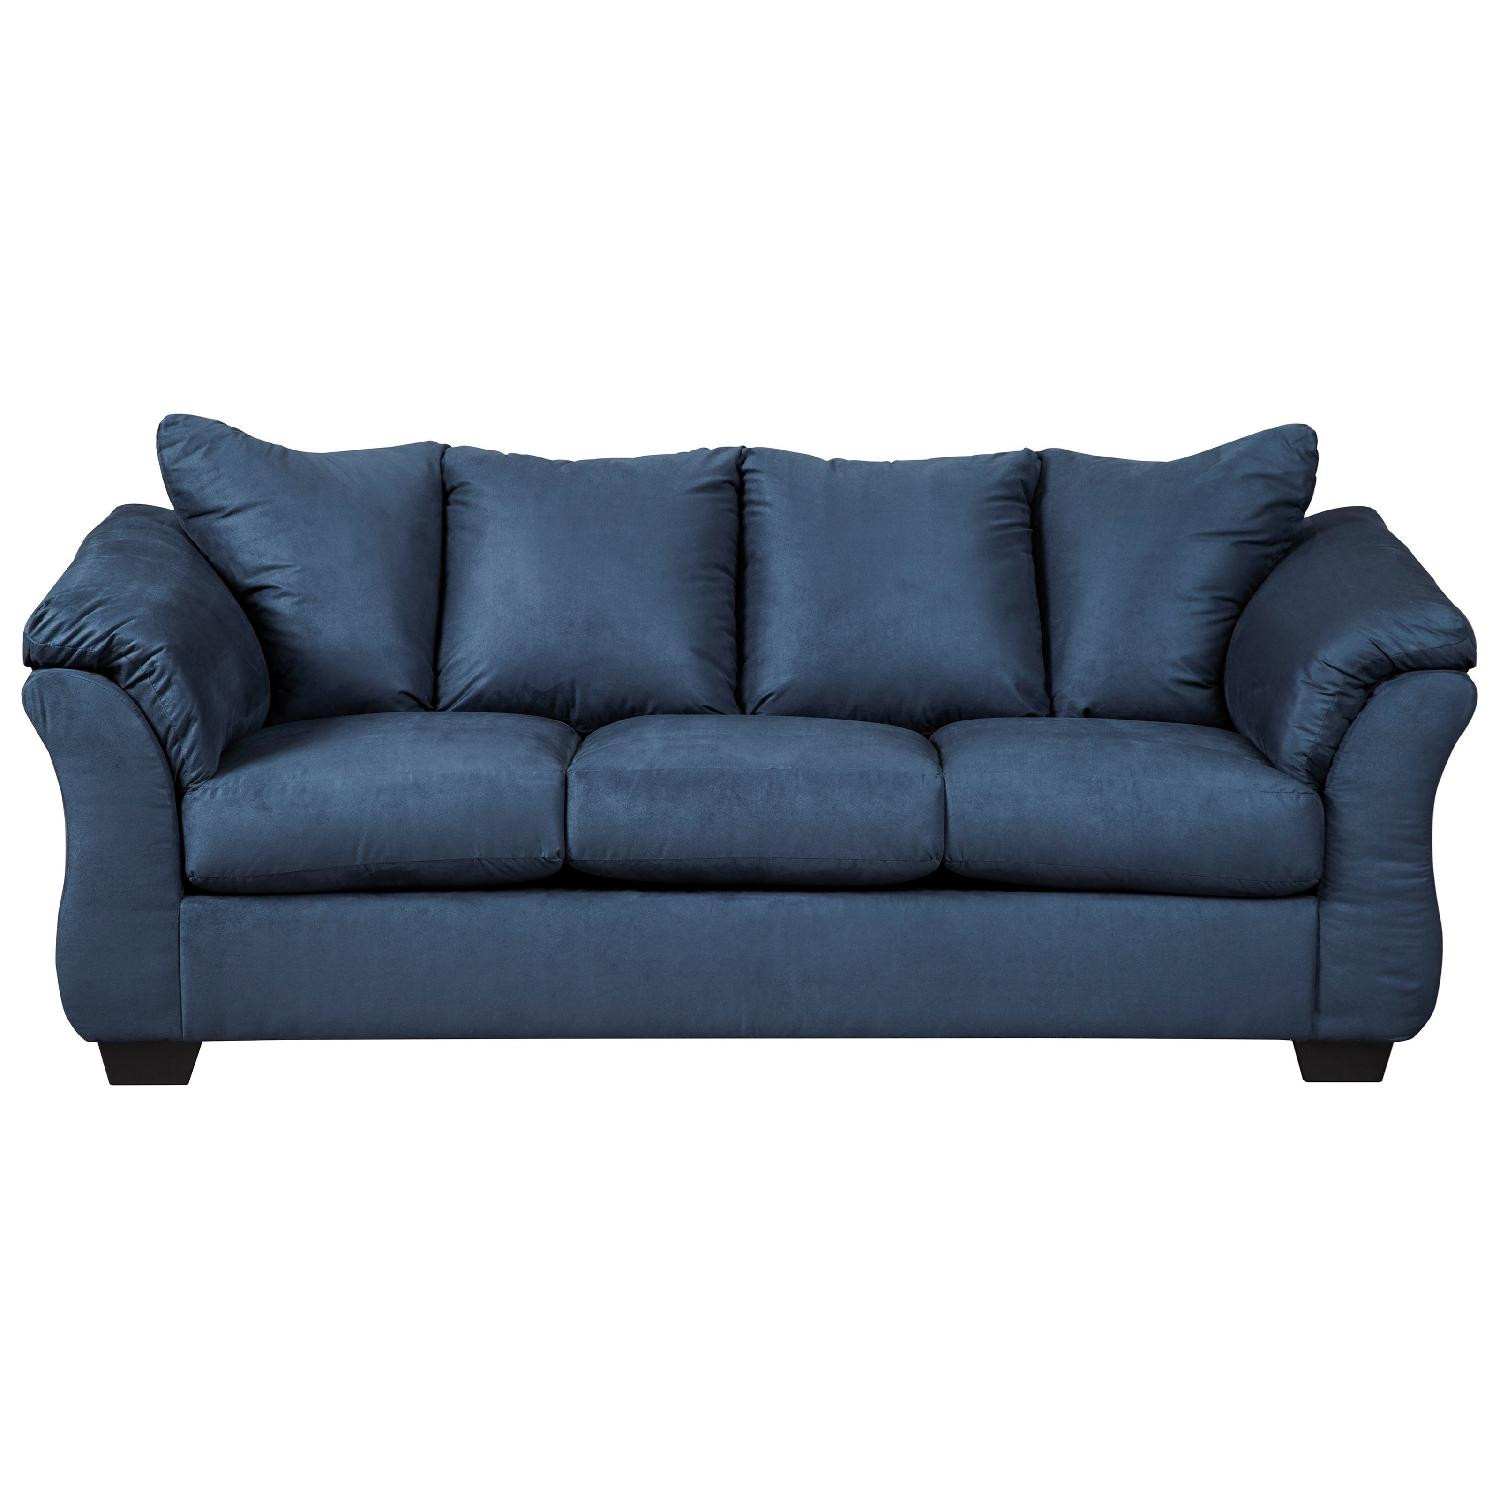 Best ideas about Ashley Darcy Sofa
. Save or Pin Ashley Darcy Blue Full Sofa Sleeper AptDeco Now.